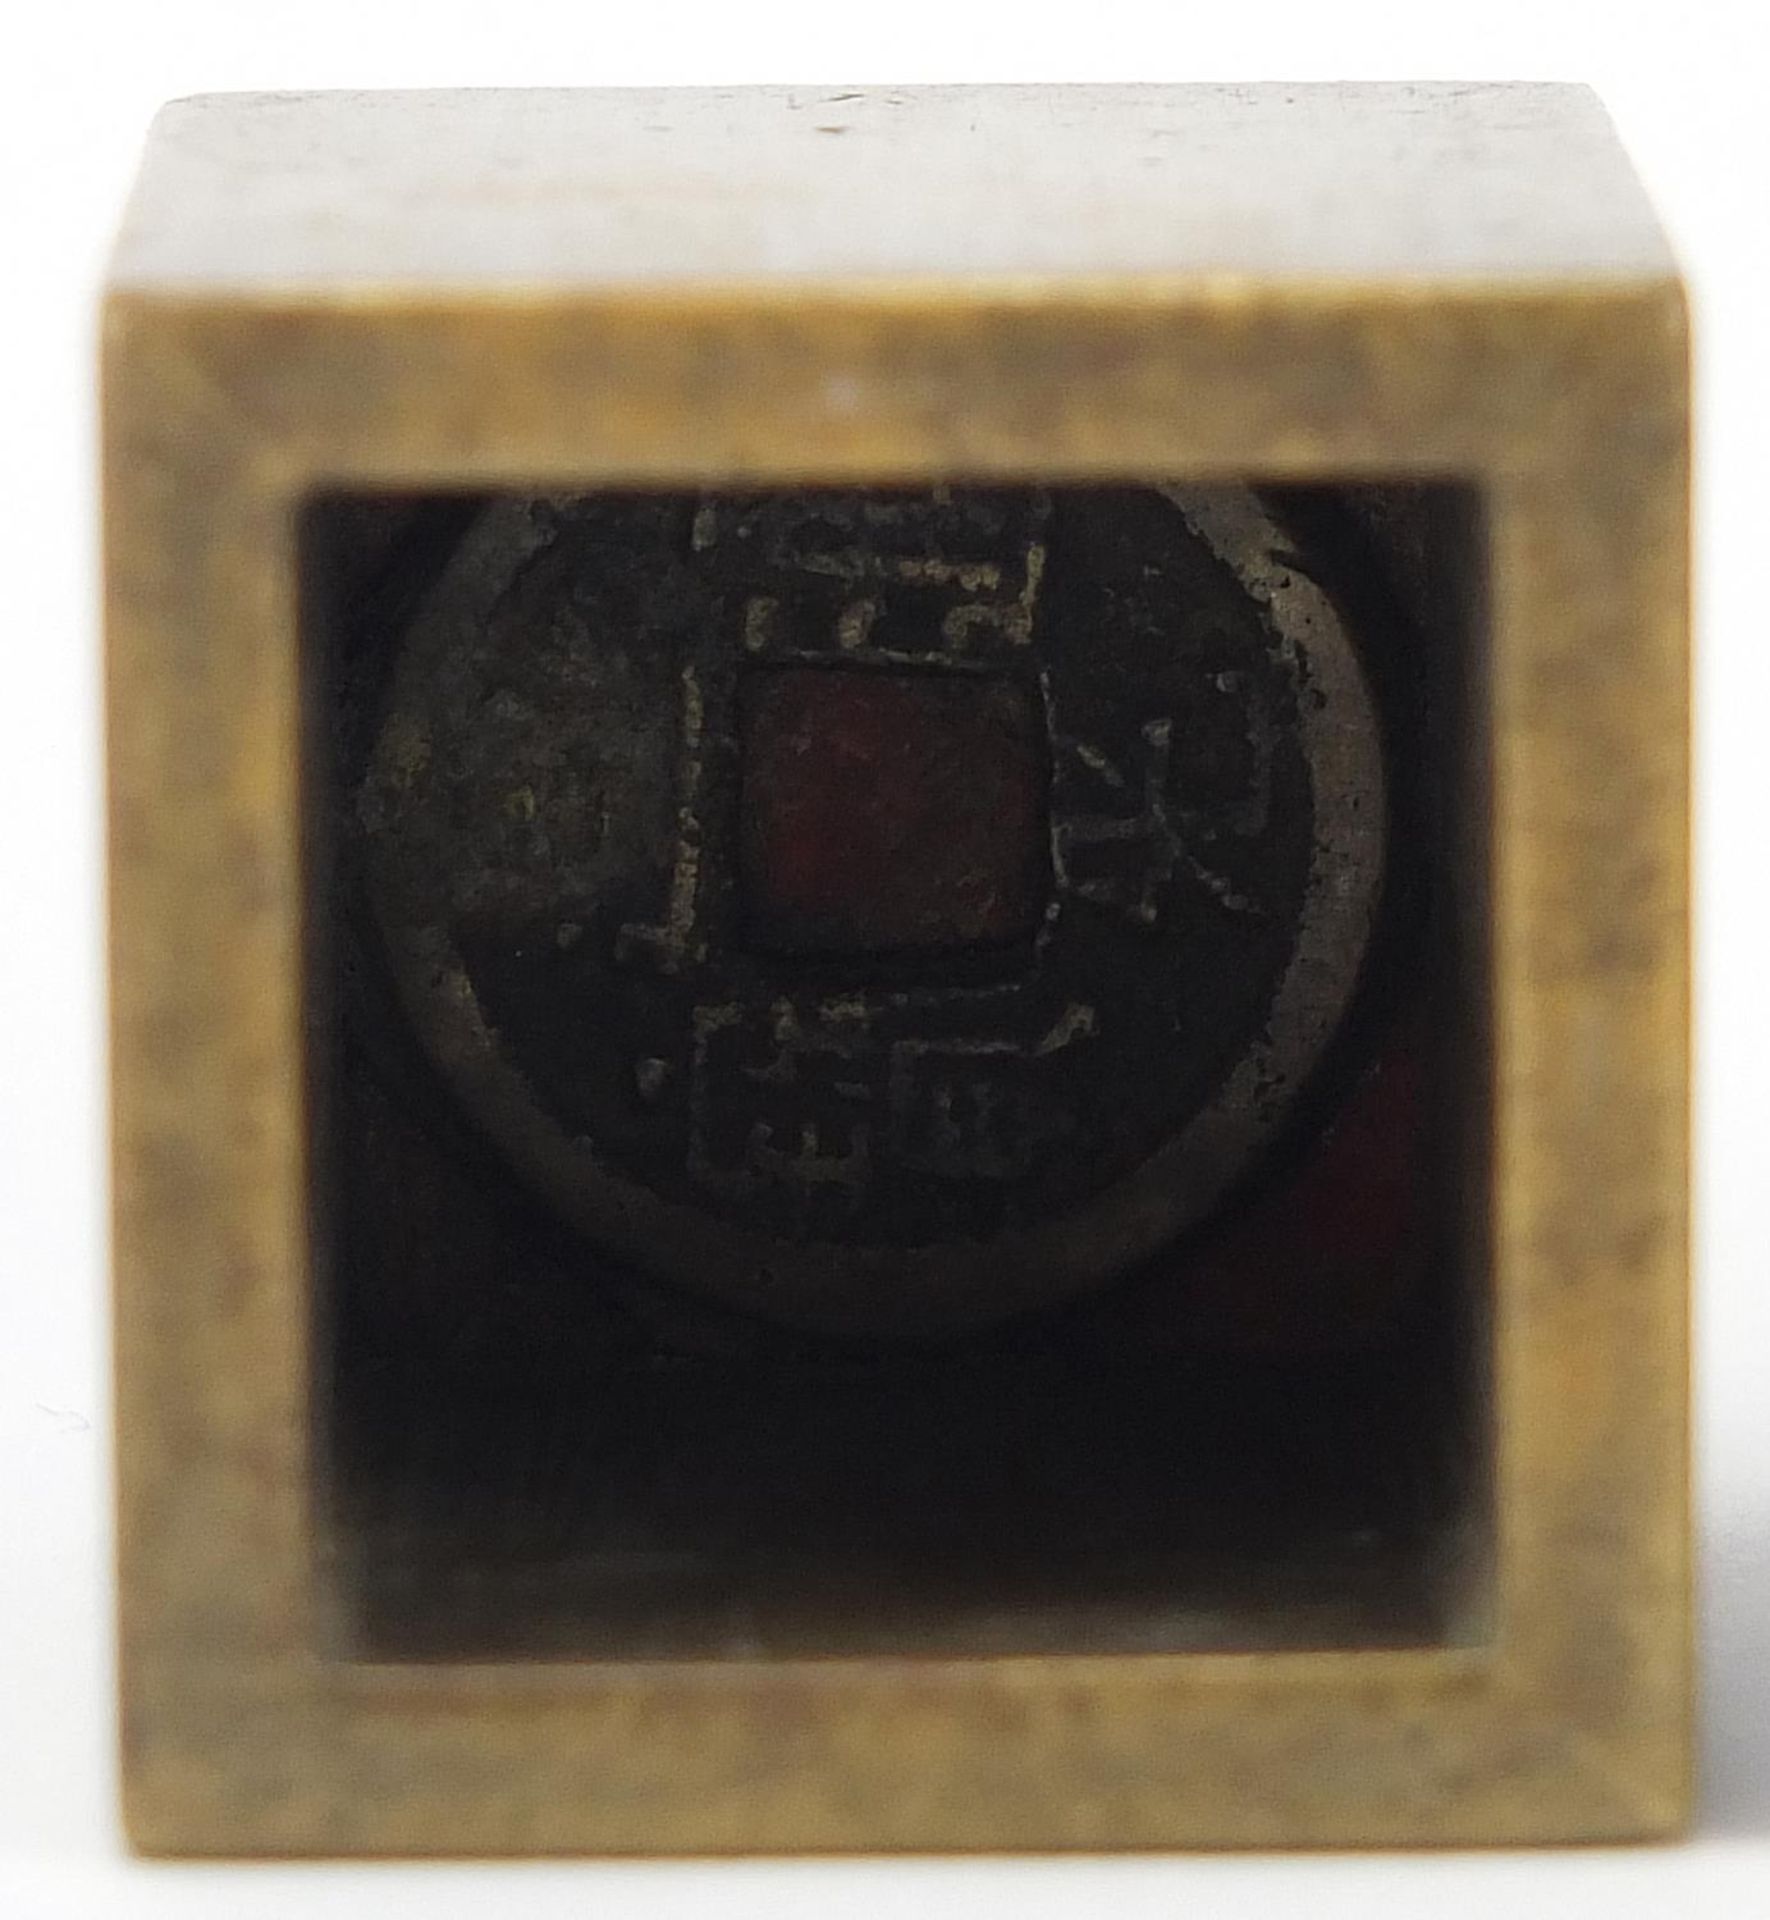 Chinese patinated bronze interlocking seal box, 3.5cm high - Image 3 of 4